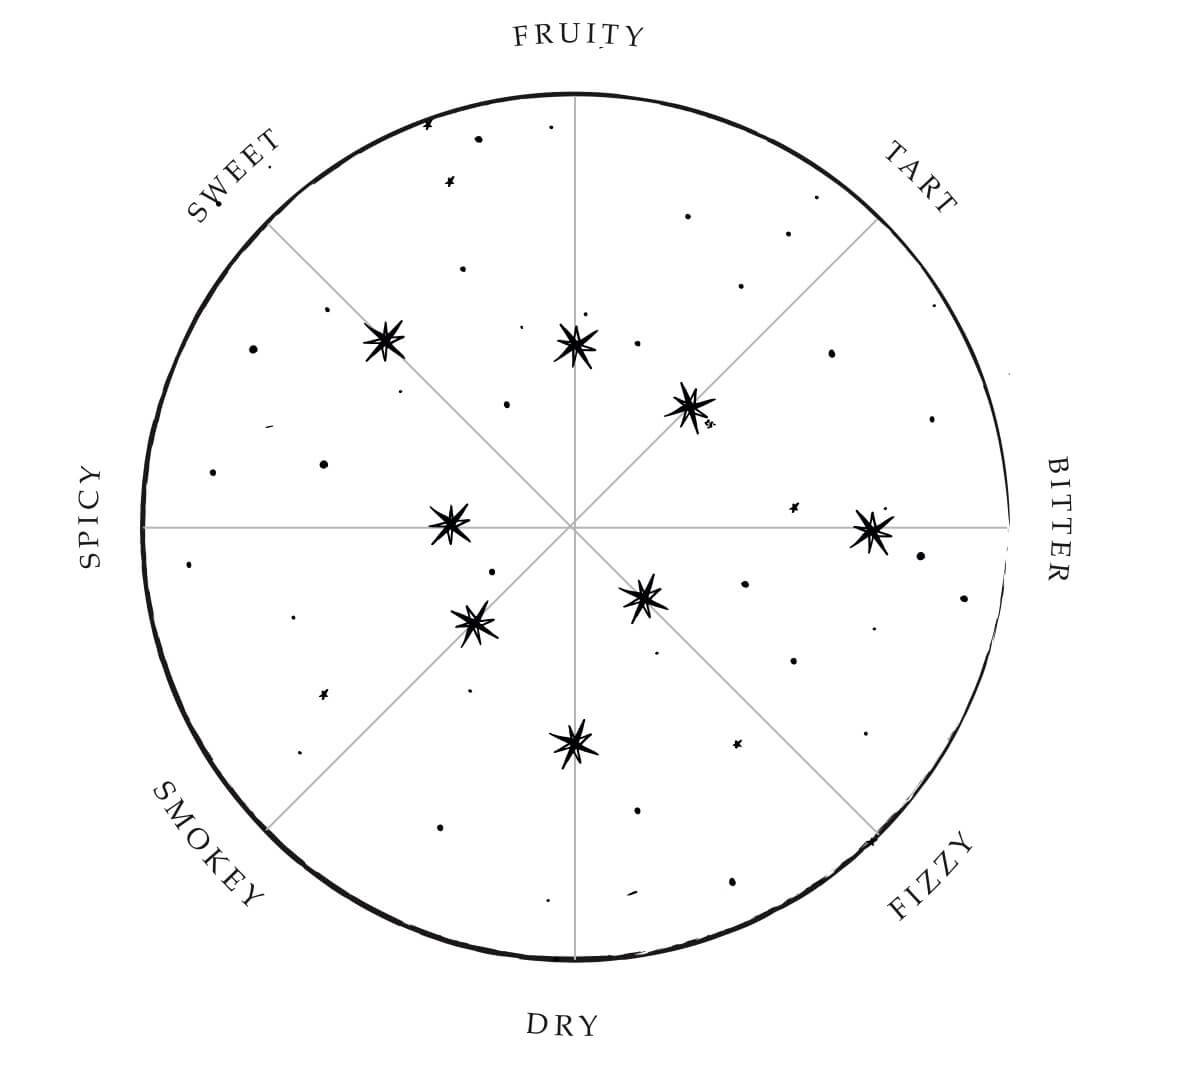 Birth chart of Ashley Johnson - Astrology horoscope